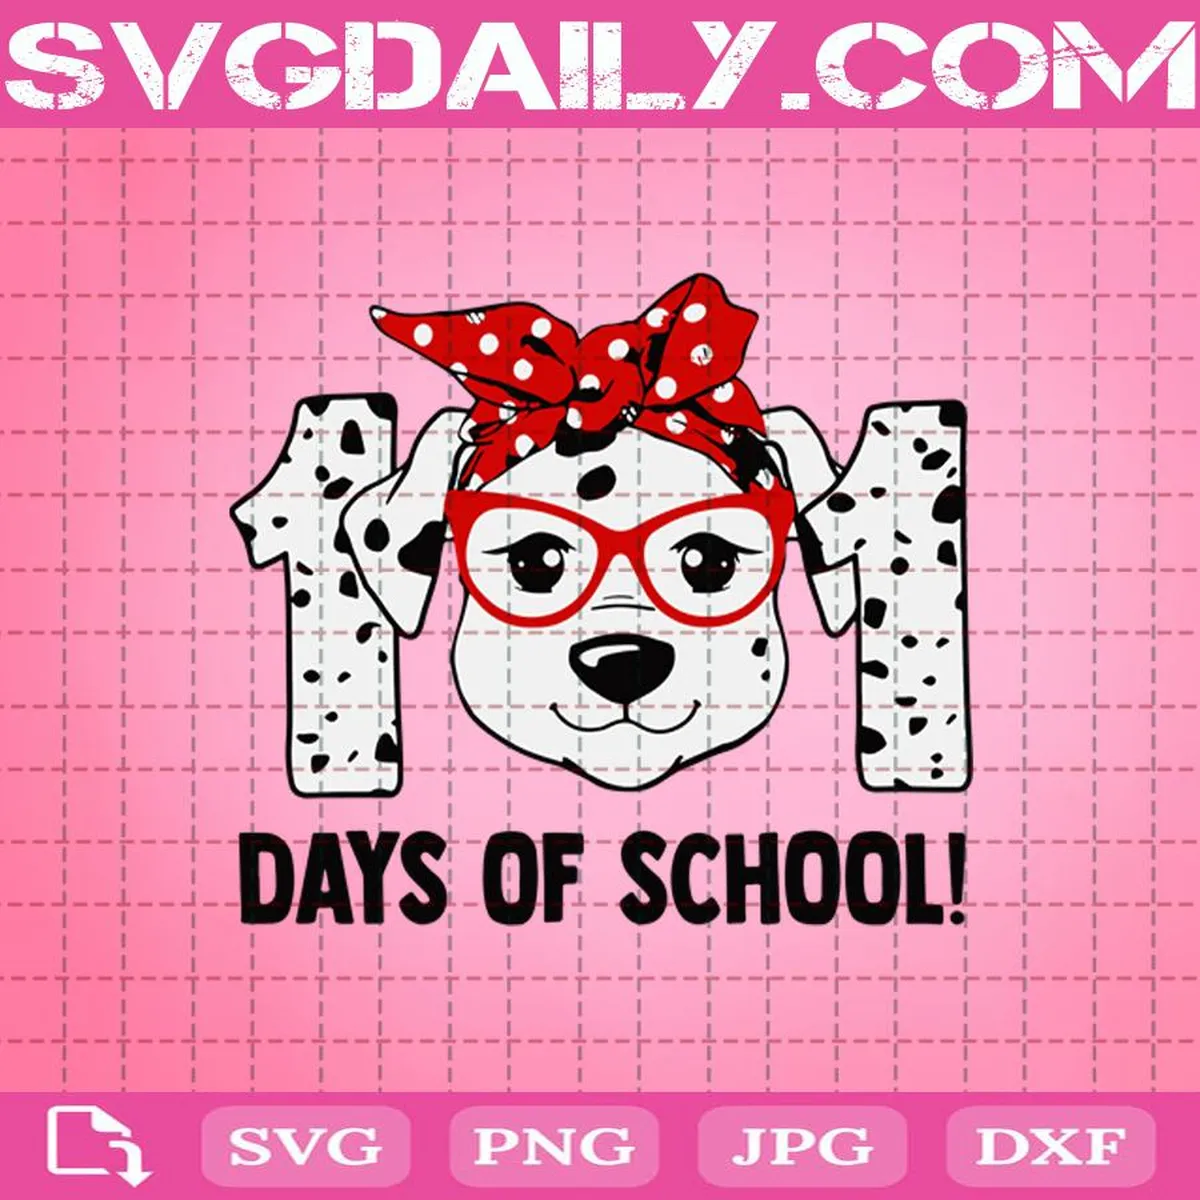 Days Of School 101 Svg, 101 Dalmatians Svg, 101 Days Svg, Teachers Svg, Dalmatian Dab Dog 101 Days Of School Svg, Dalmatian Dog Teachers Kids Svg